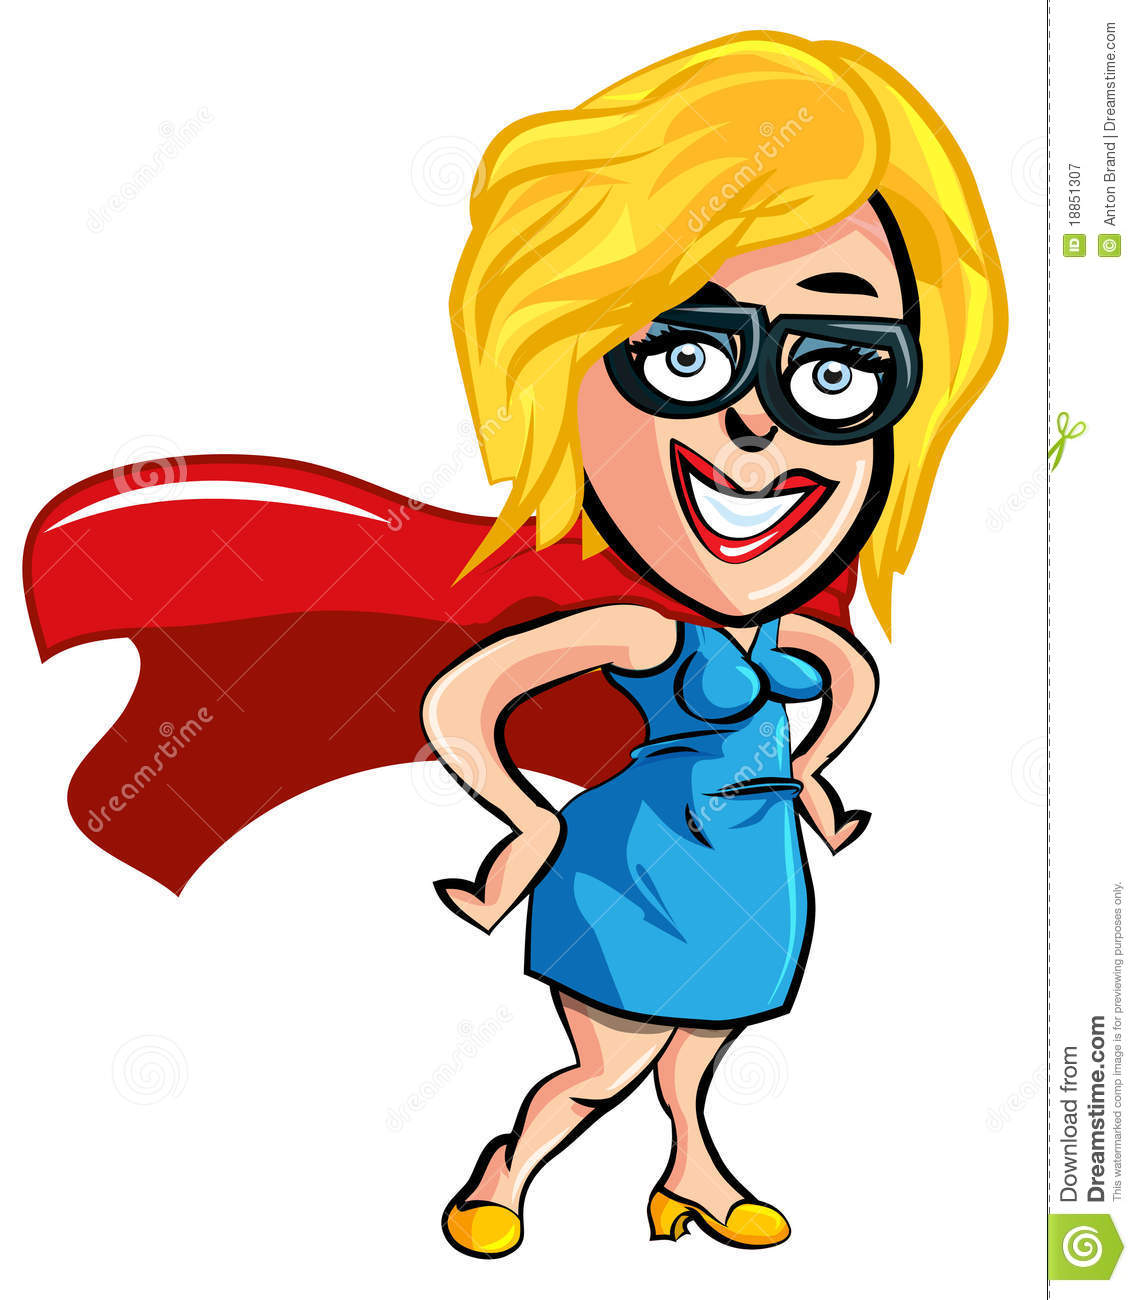 Cartoon Superhero Office Worker Lady Royalty Free Stock Photography